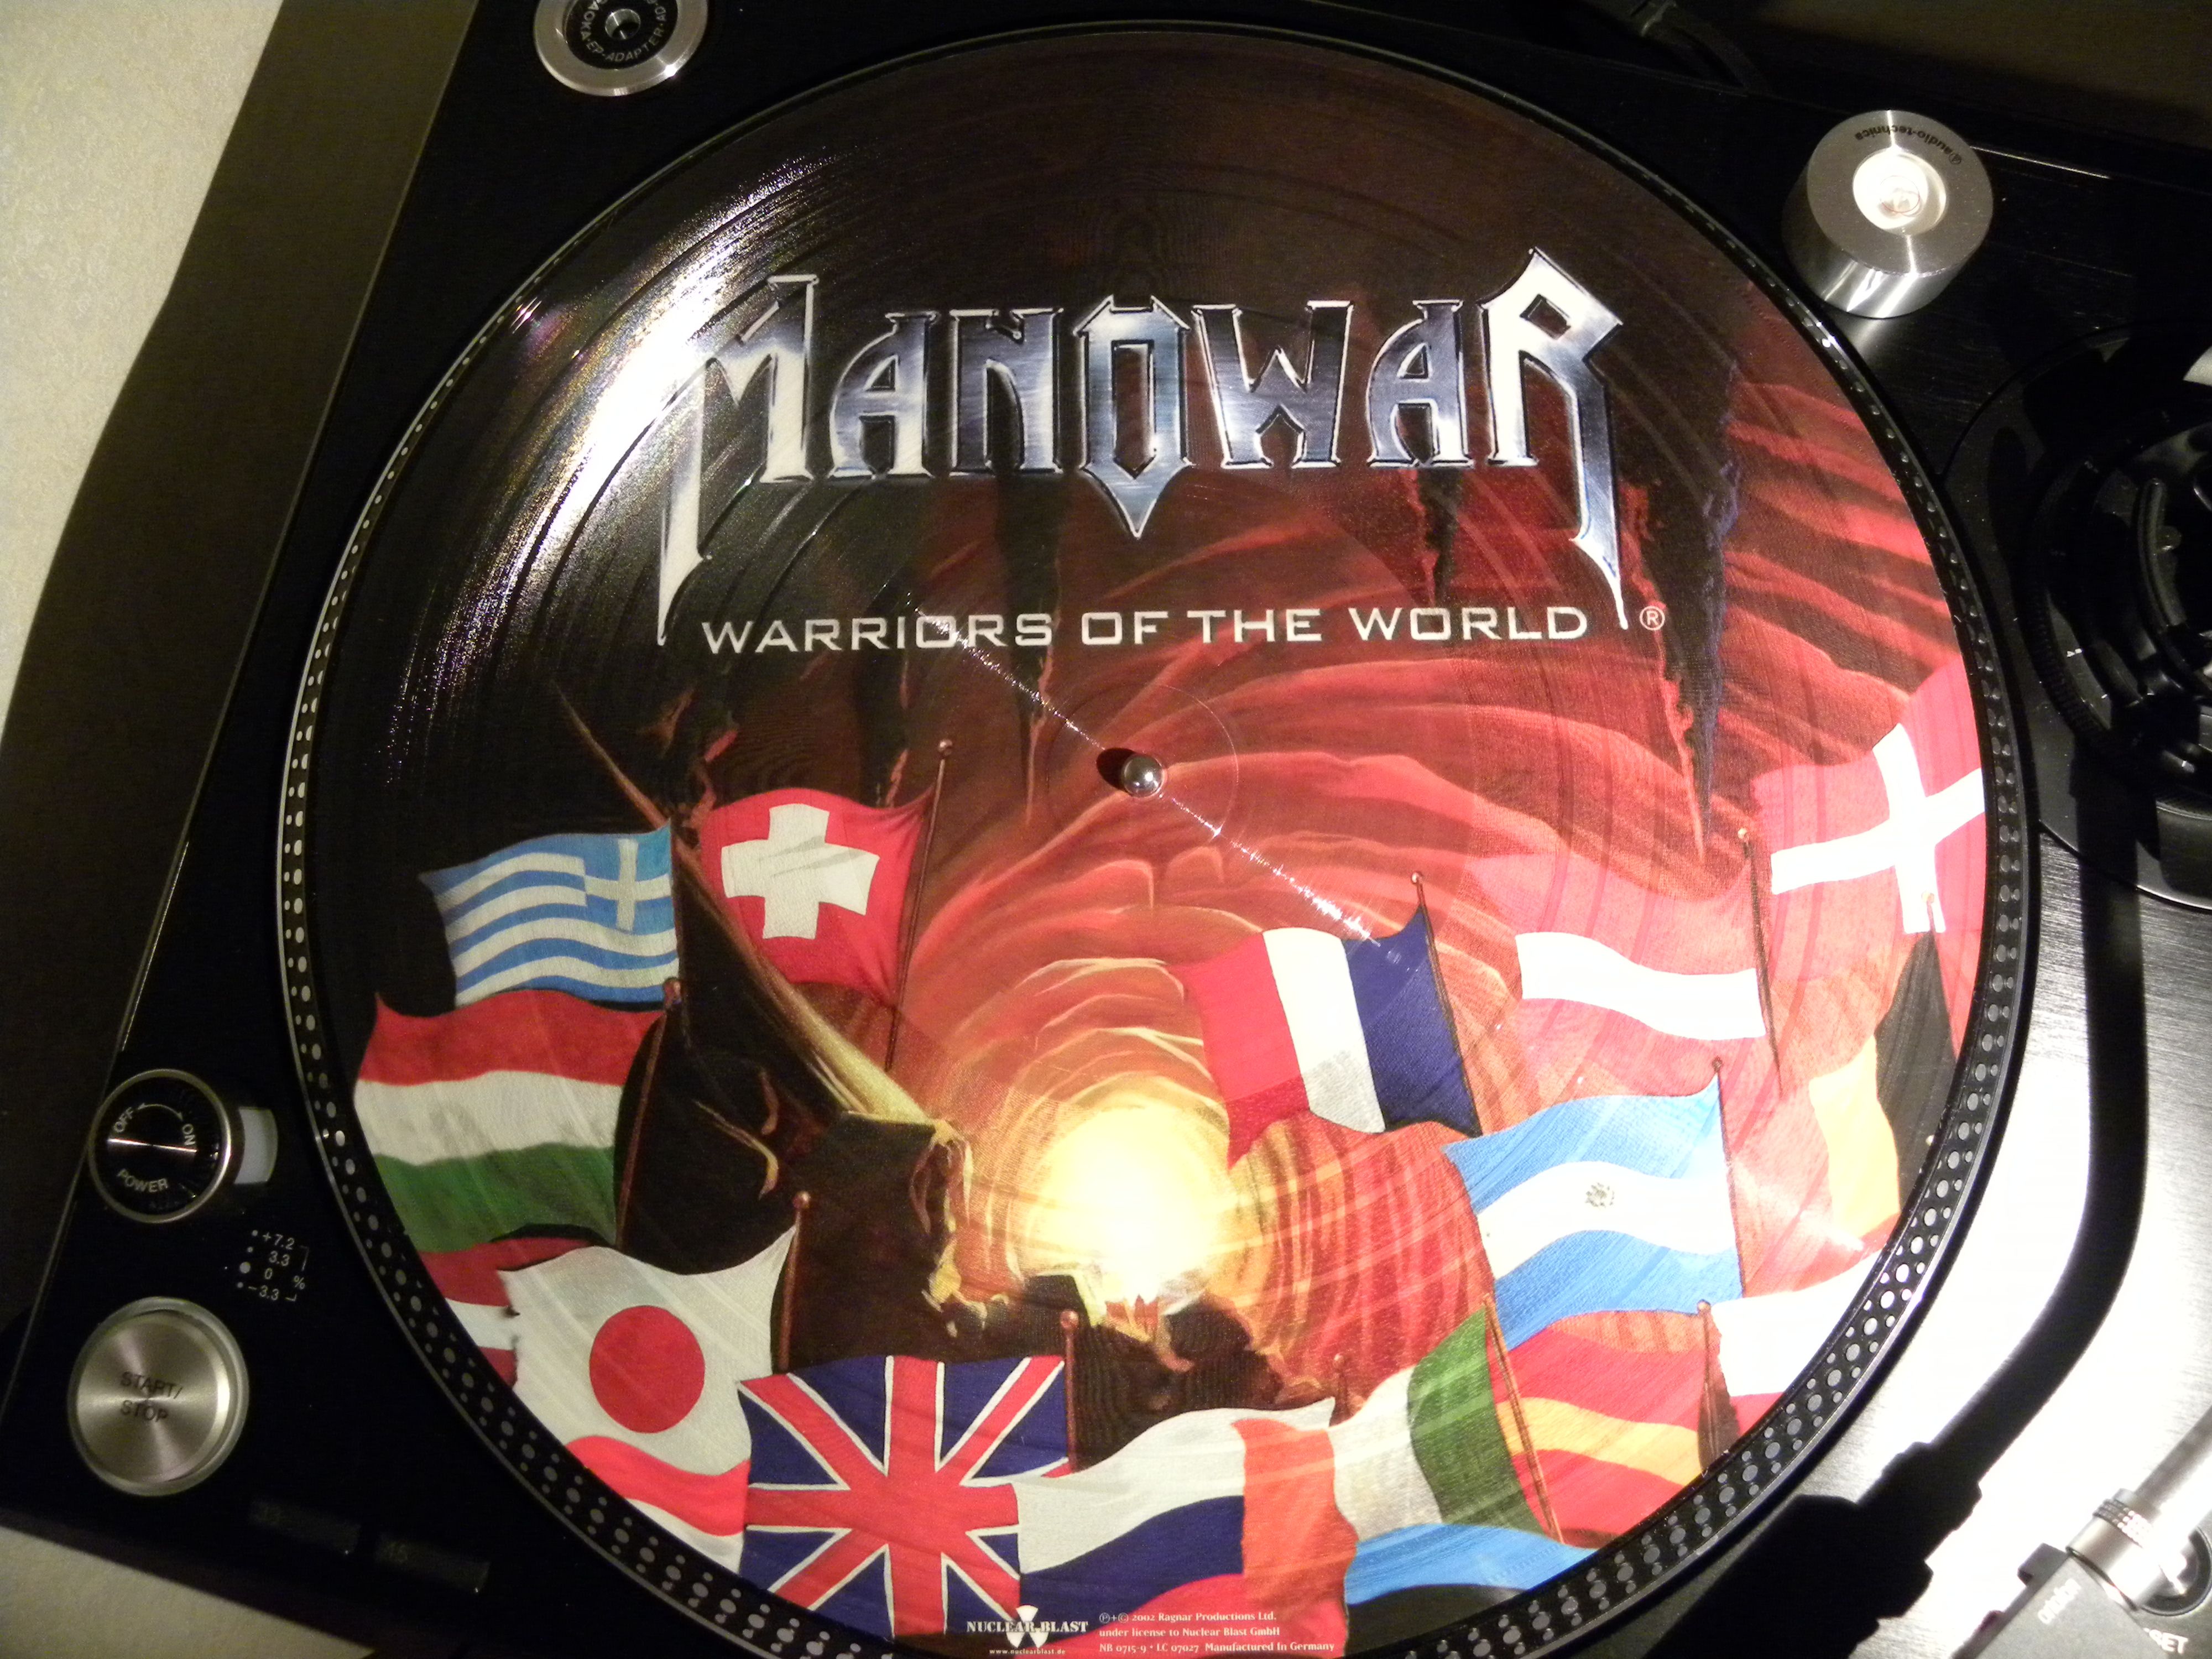 Manowar united. Manowar 2002. Manowar Warriors of the World. Мановар Warriors of the World. 2002 Warriors of the World.